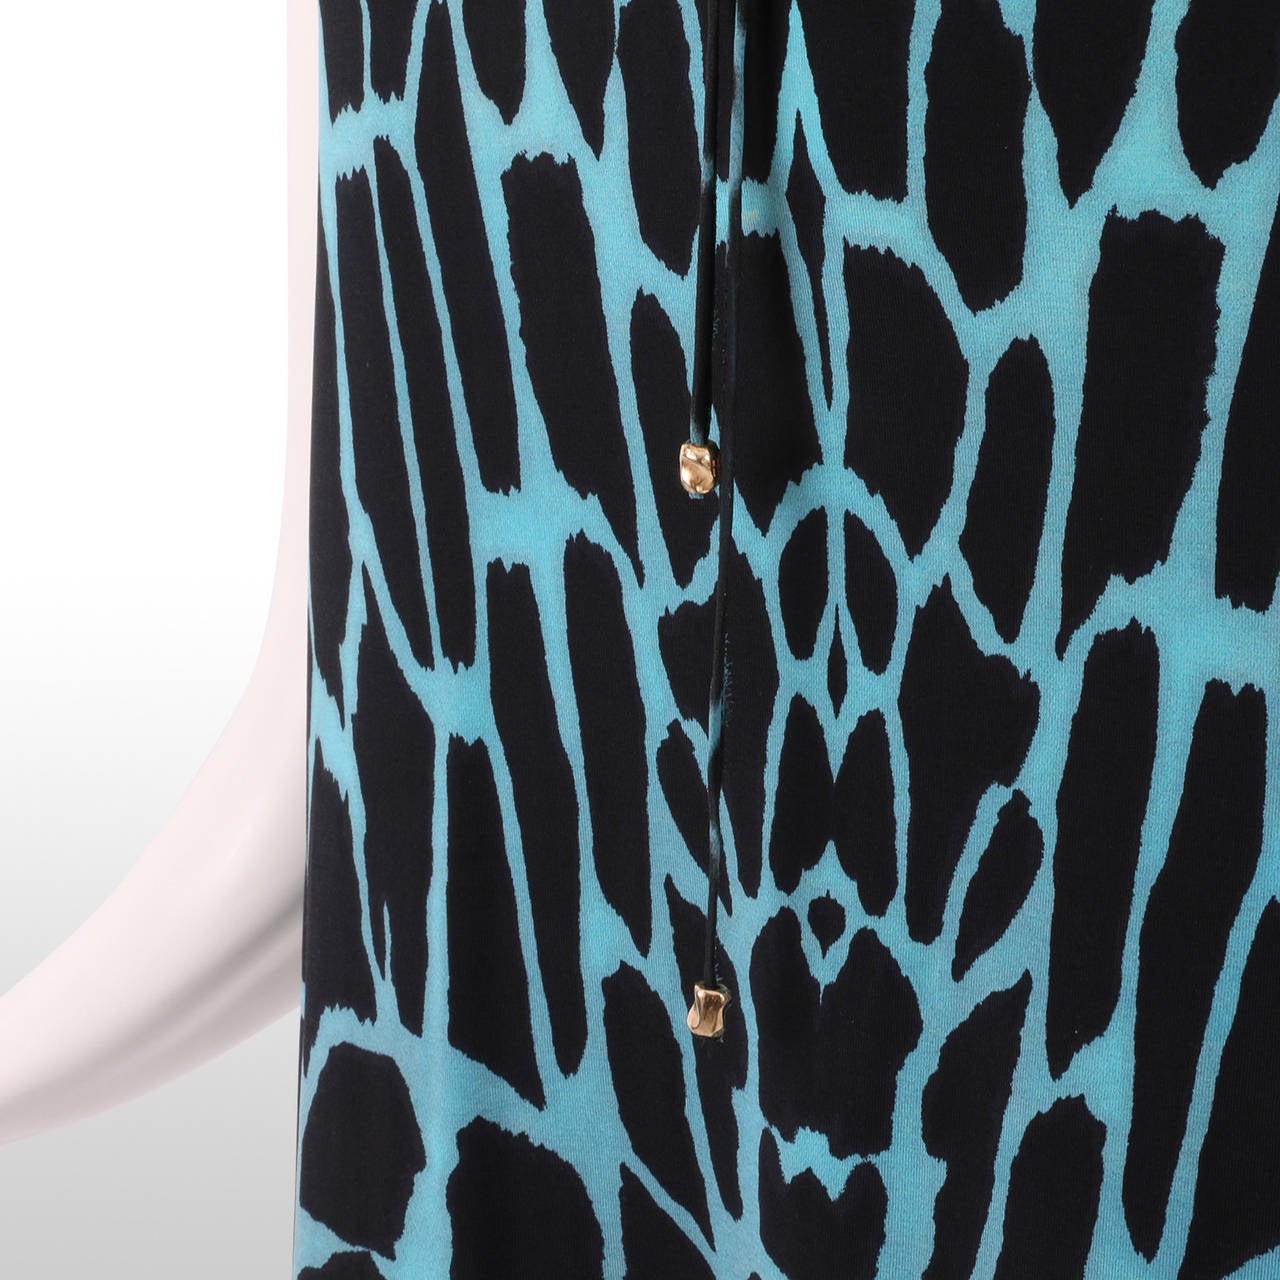 Roberto Cavalli Turquoise and Black Giraffe Print Jersey Dress For Sale 3